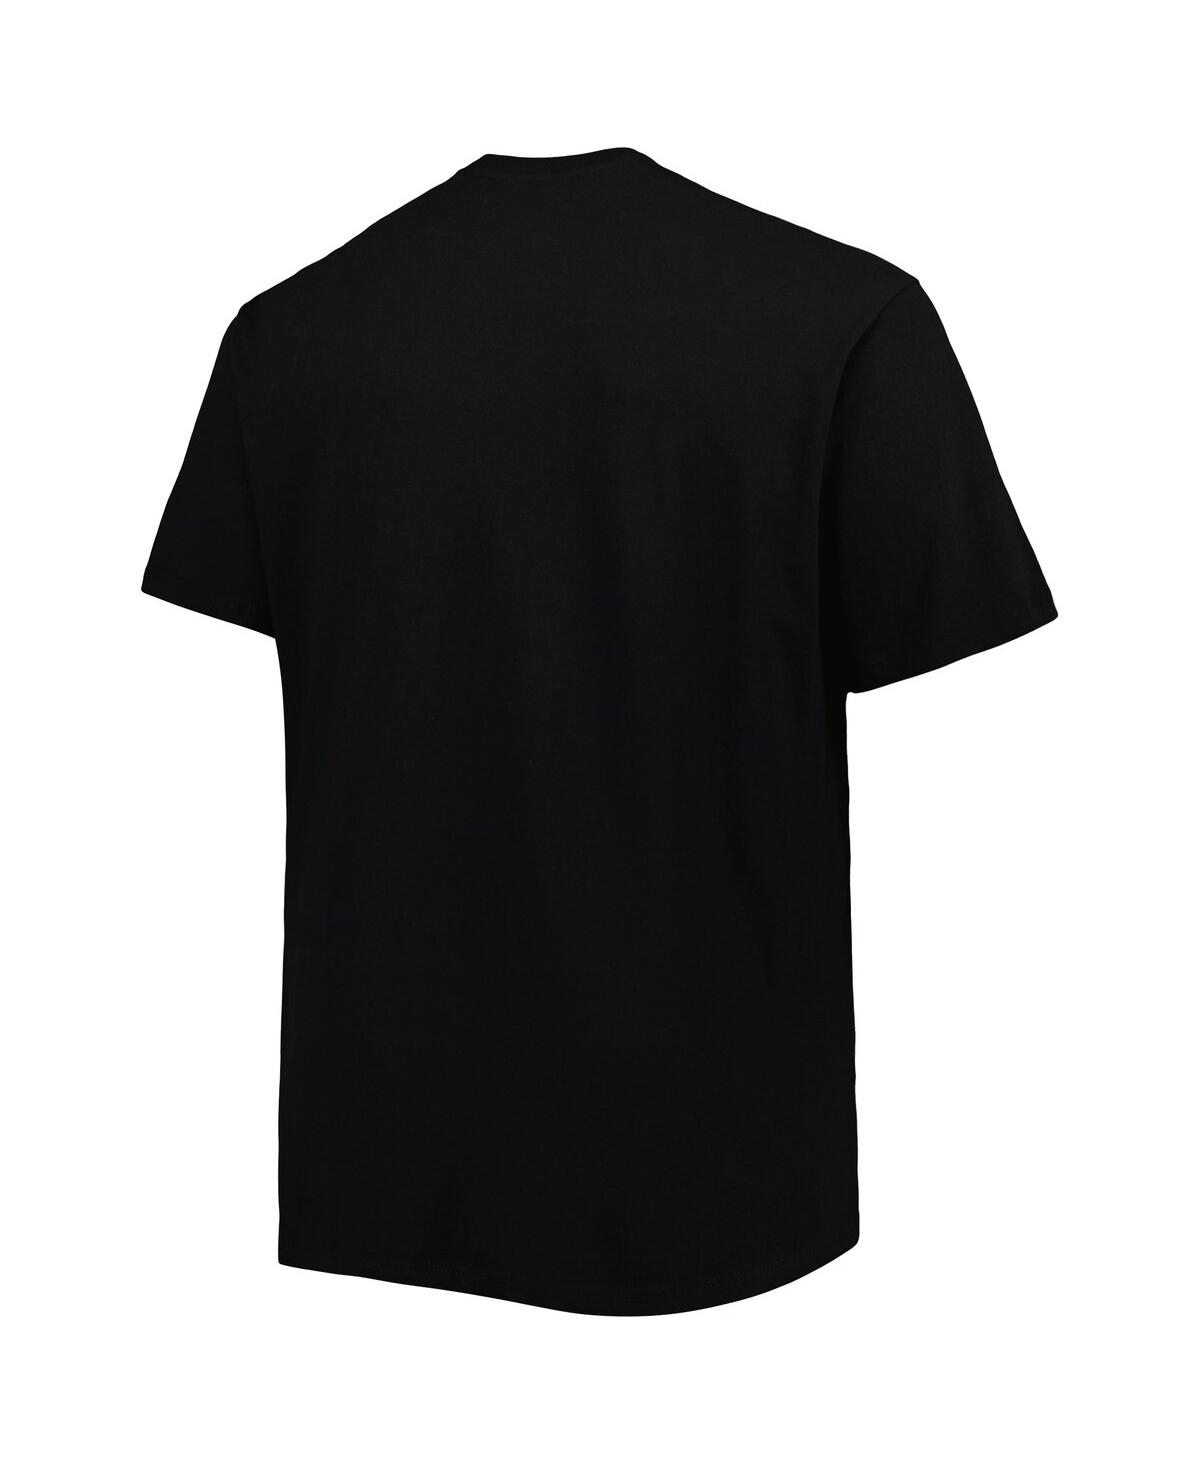 Shop Profile Men's Black Brooklyn Nets Big And Tall Heart And Soul T-shirt